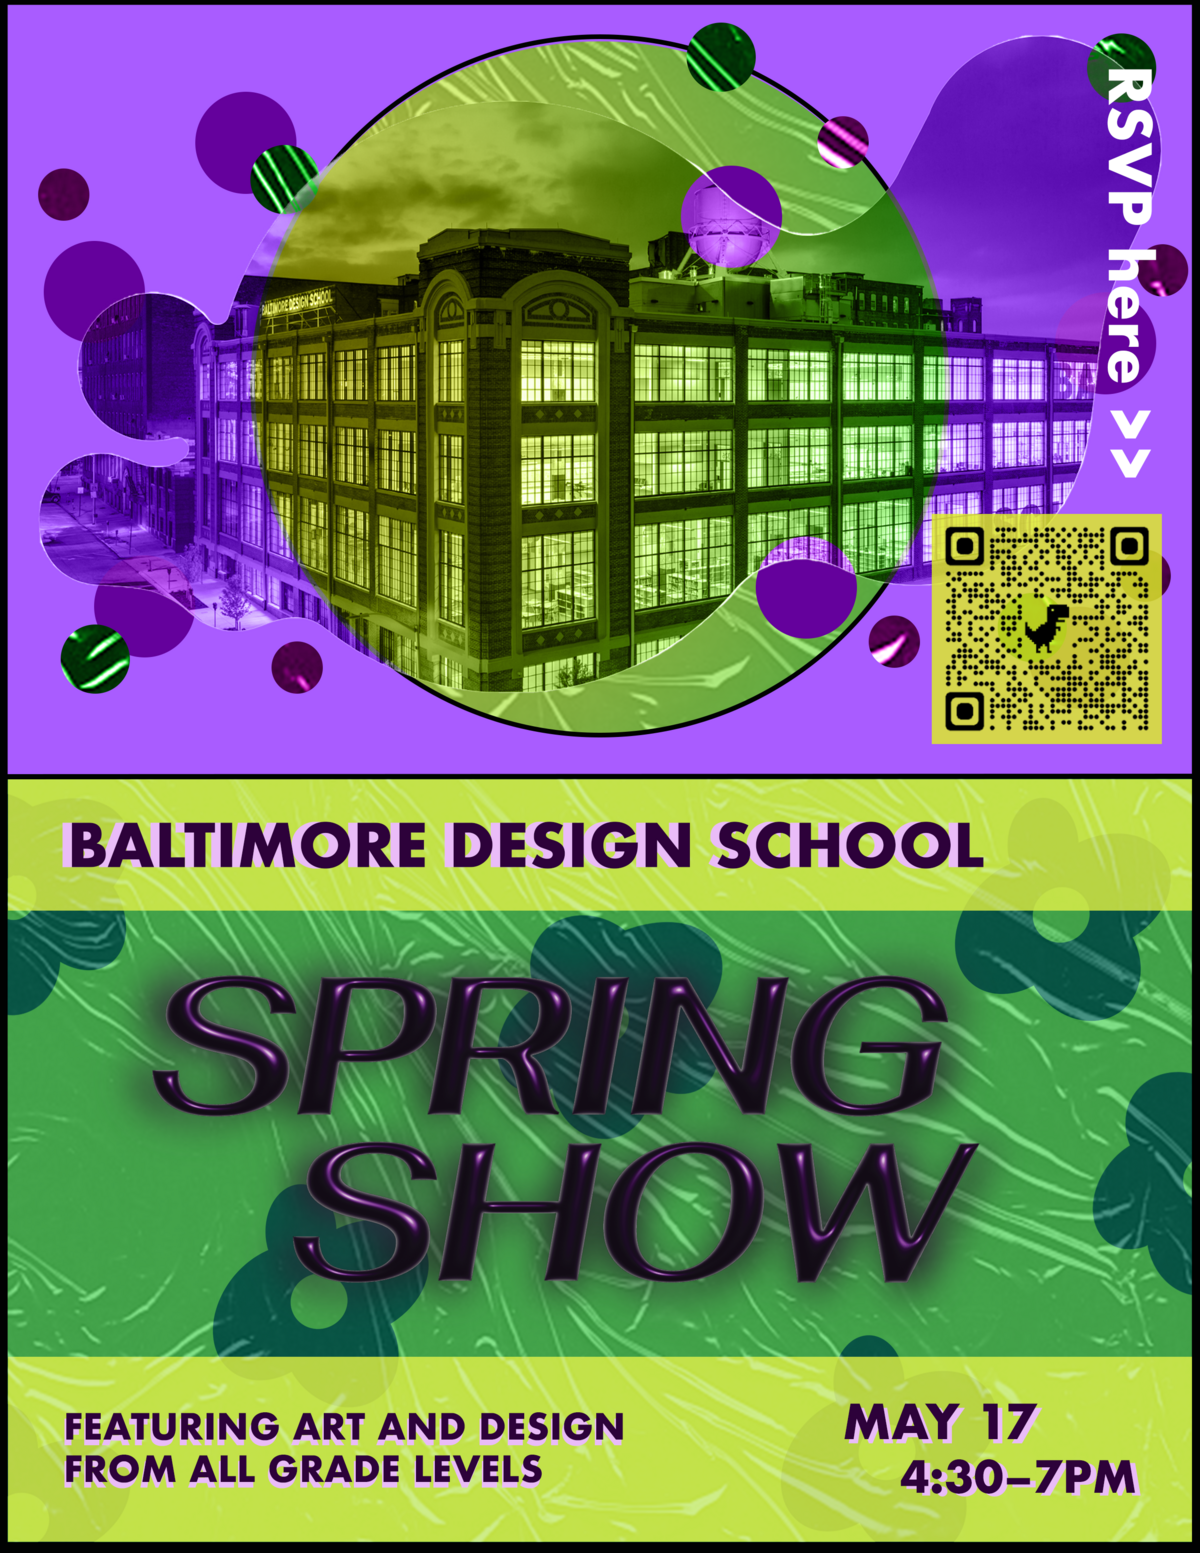 Baltimore Design School Spring Art Showcase & Fashion Show